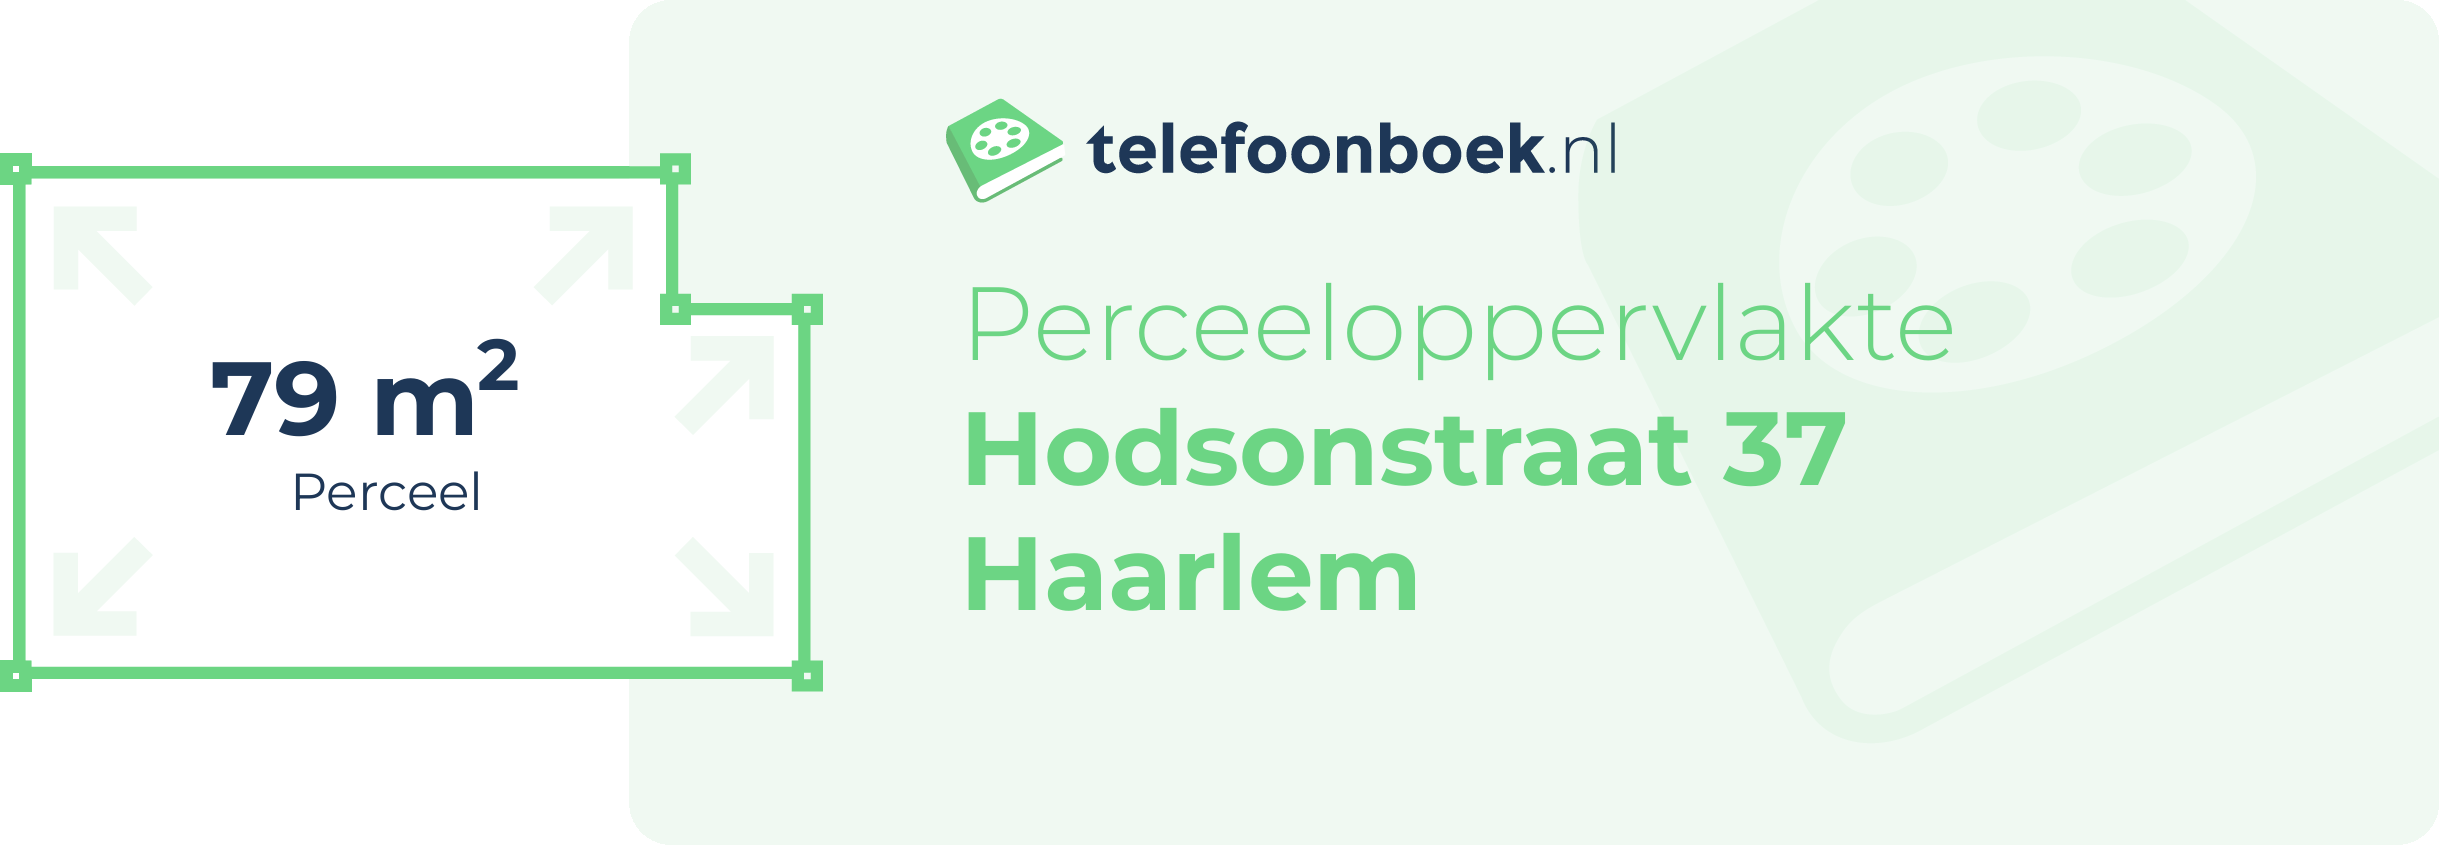 Perceeloppervlakte Hodsonstraat 37 Haarlem